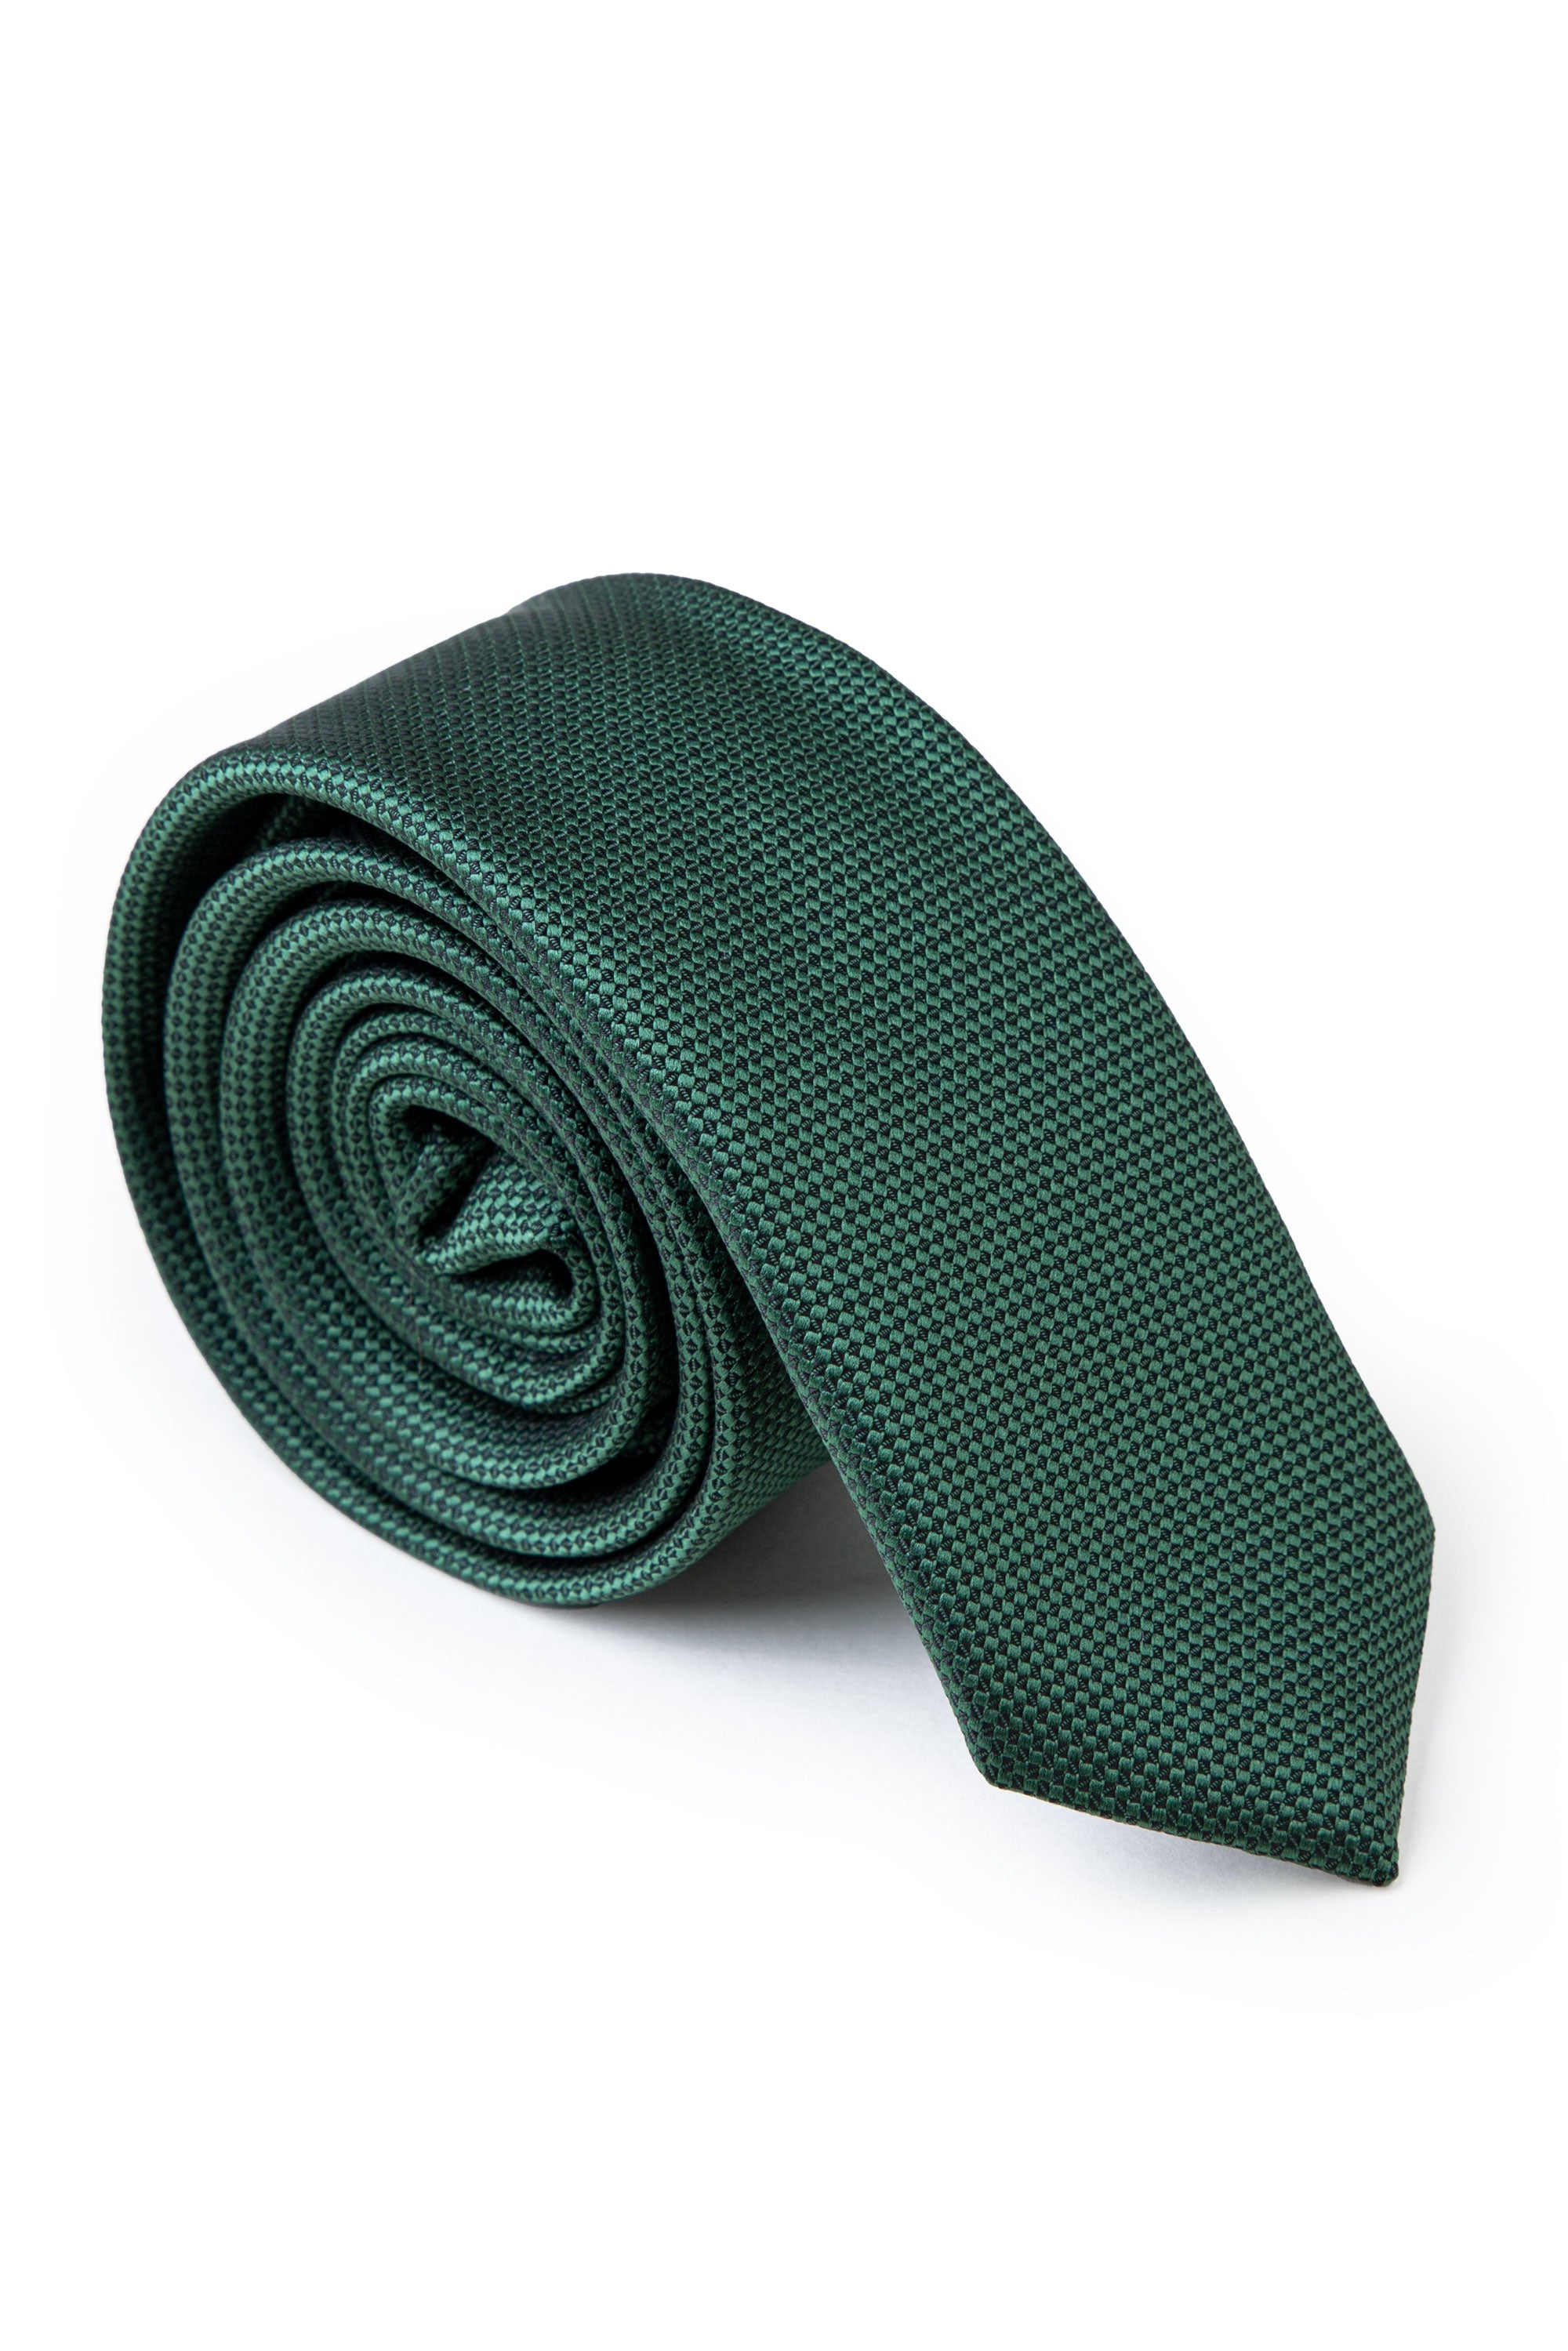 Plain Green Tie Loose